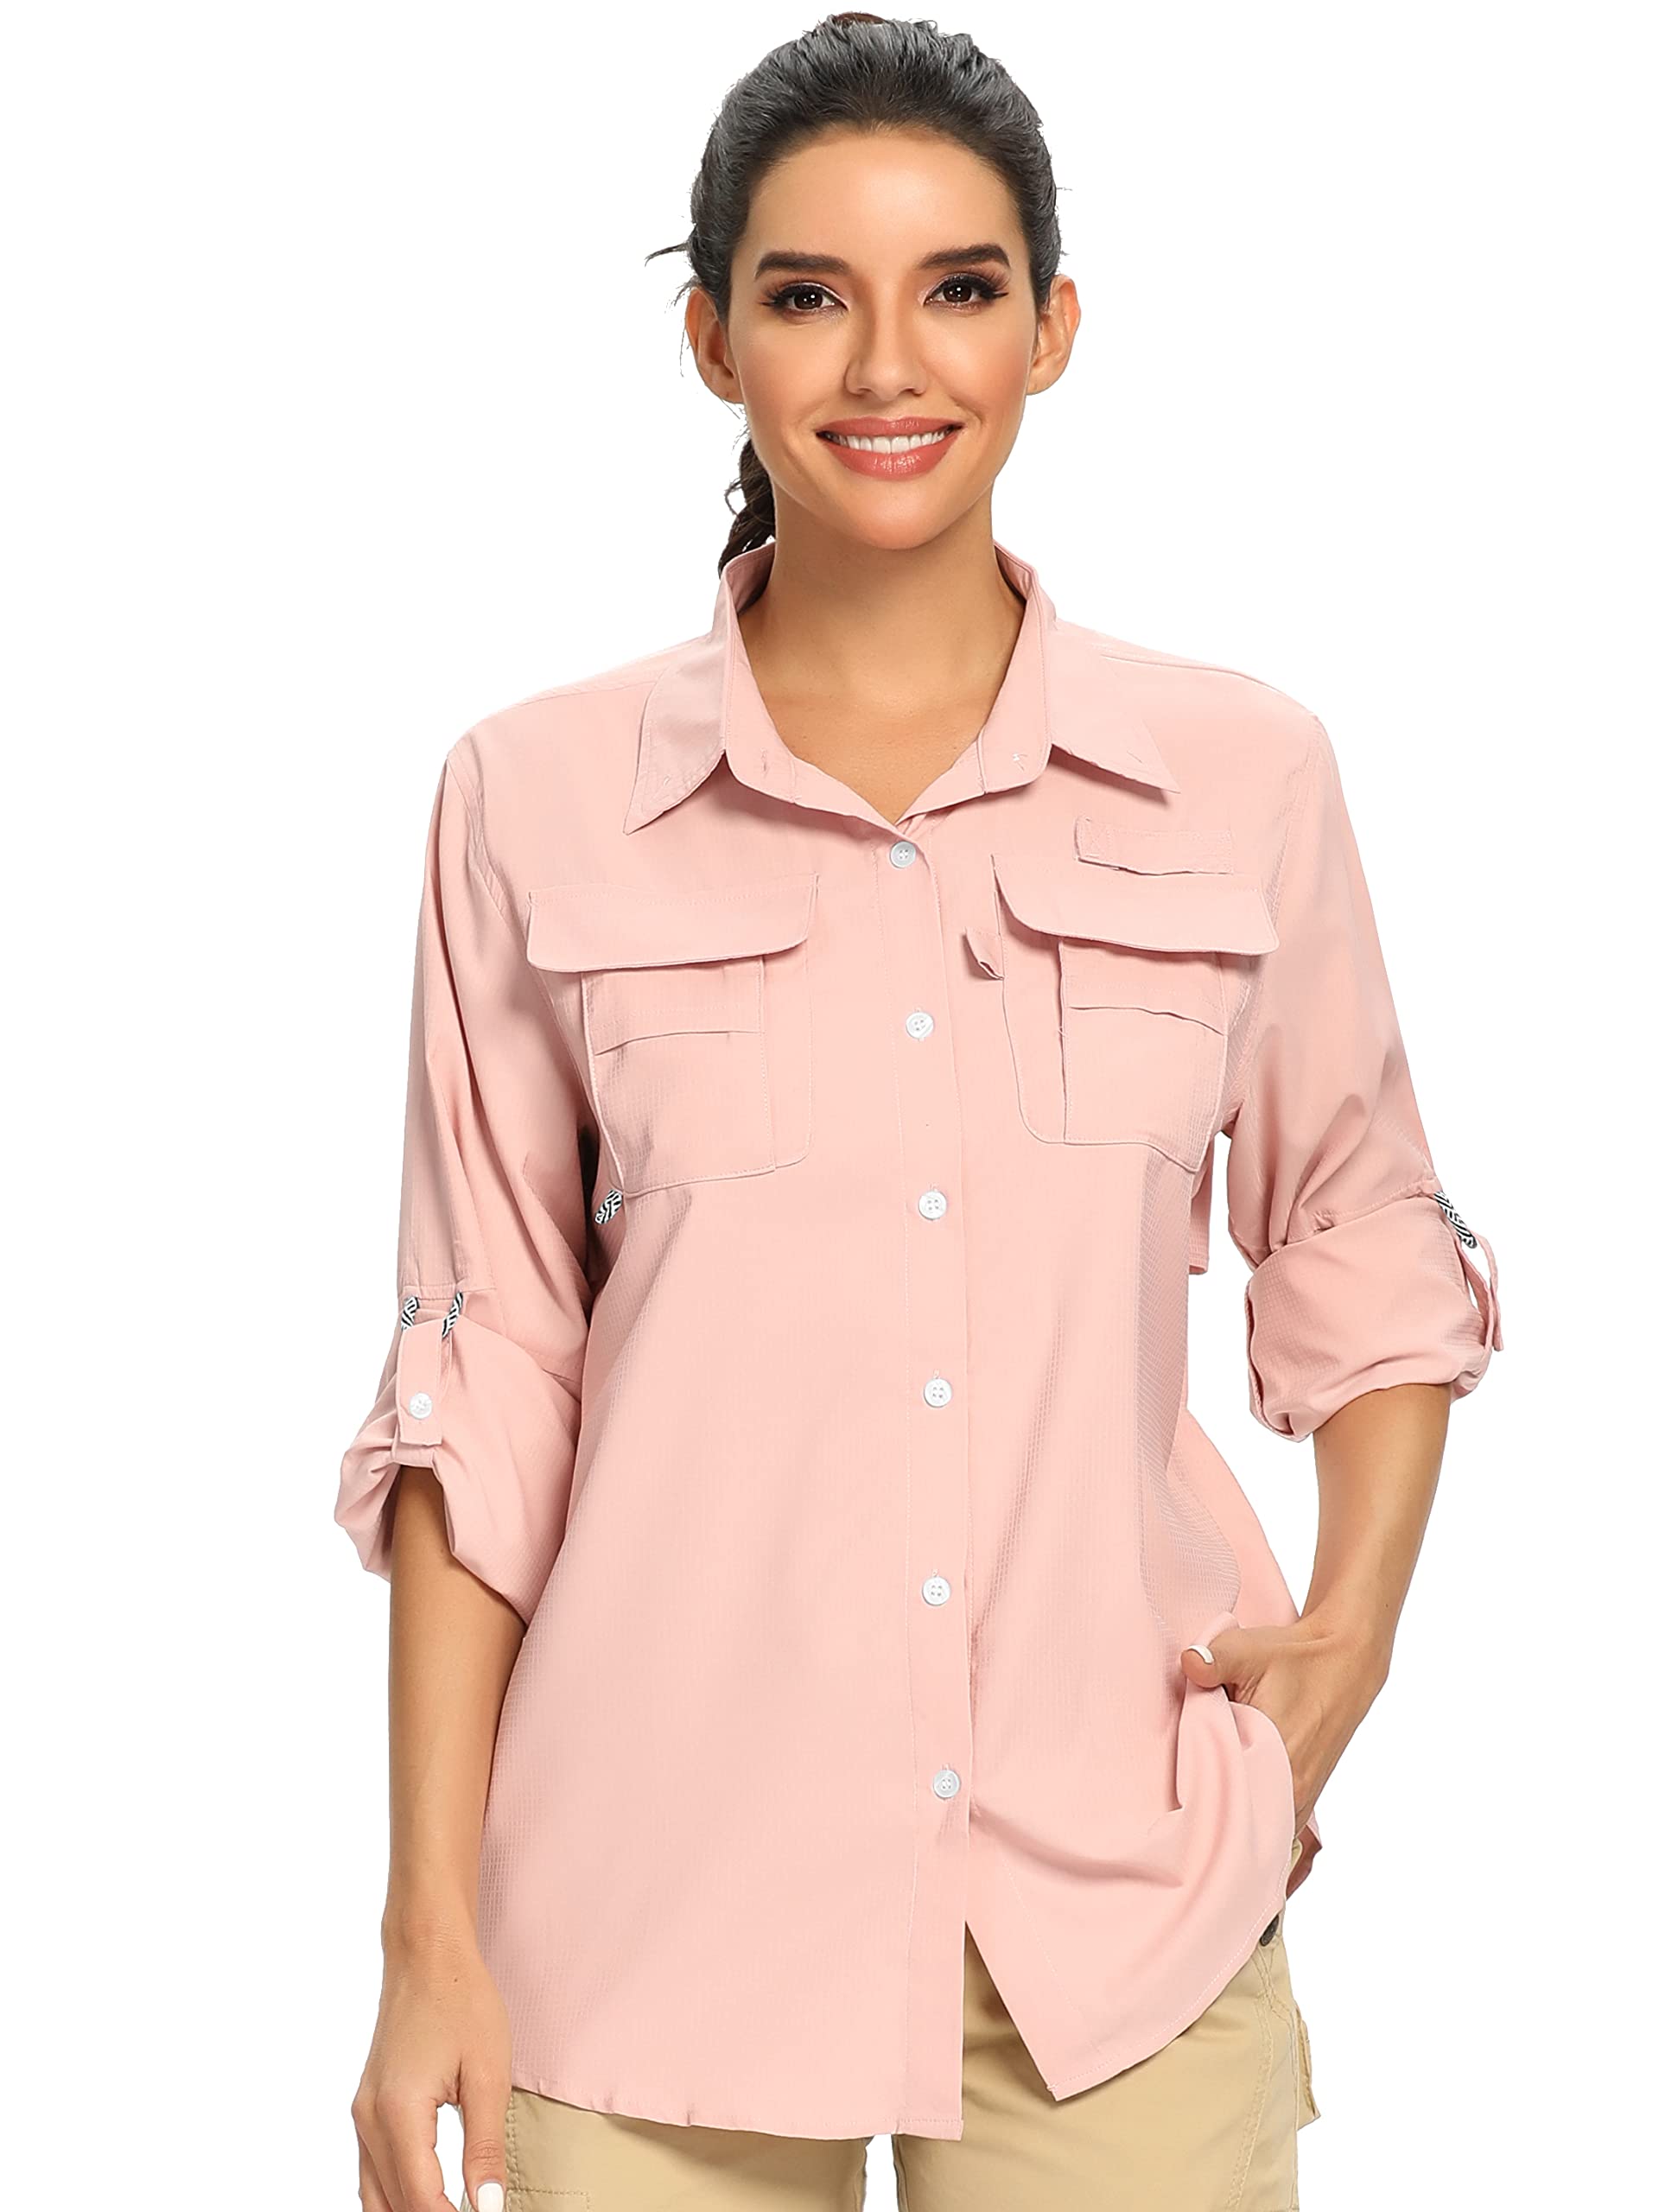  Womens UPF 50+ UV Sun Protection Shirts Long Sleeve